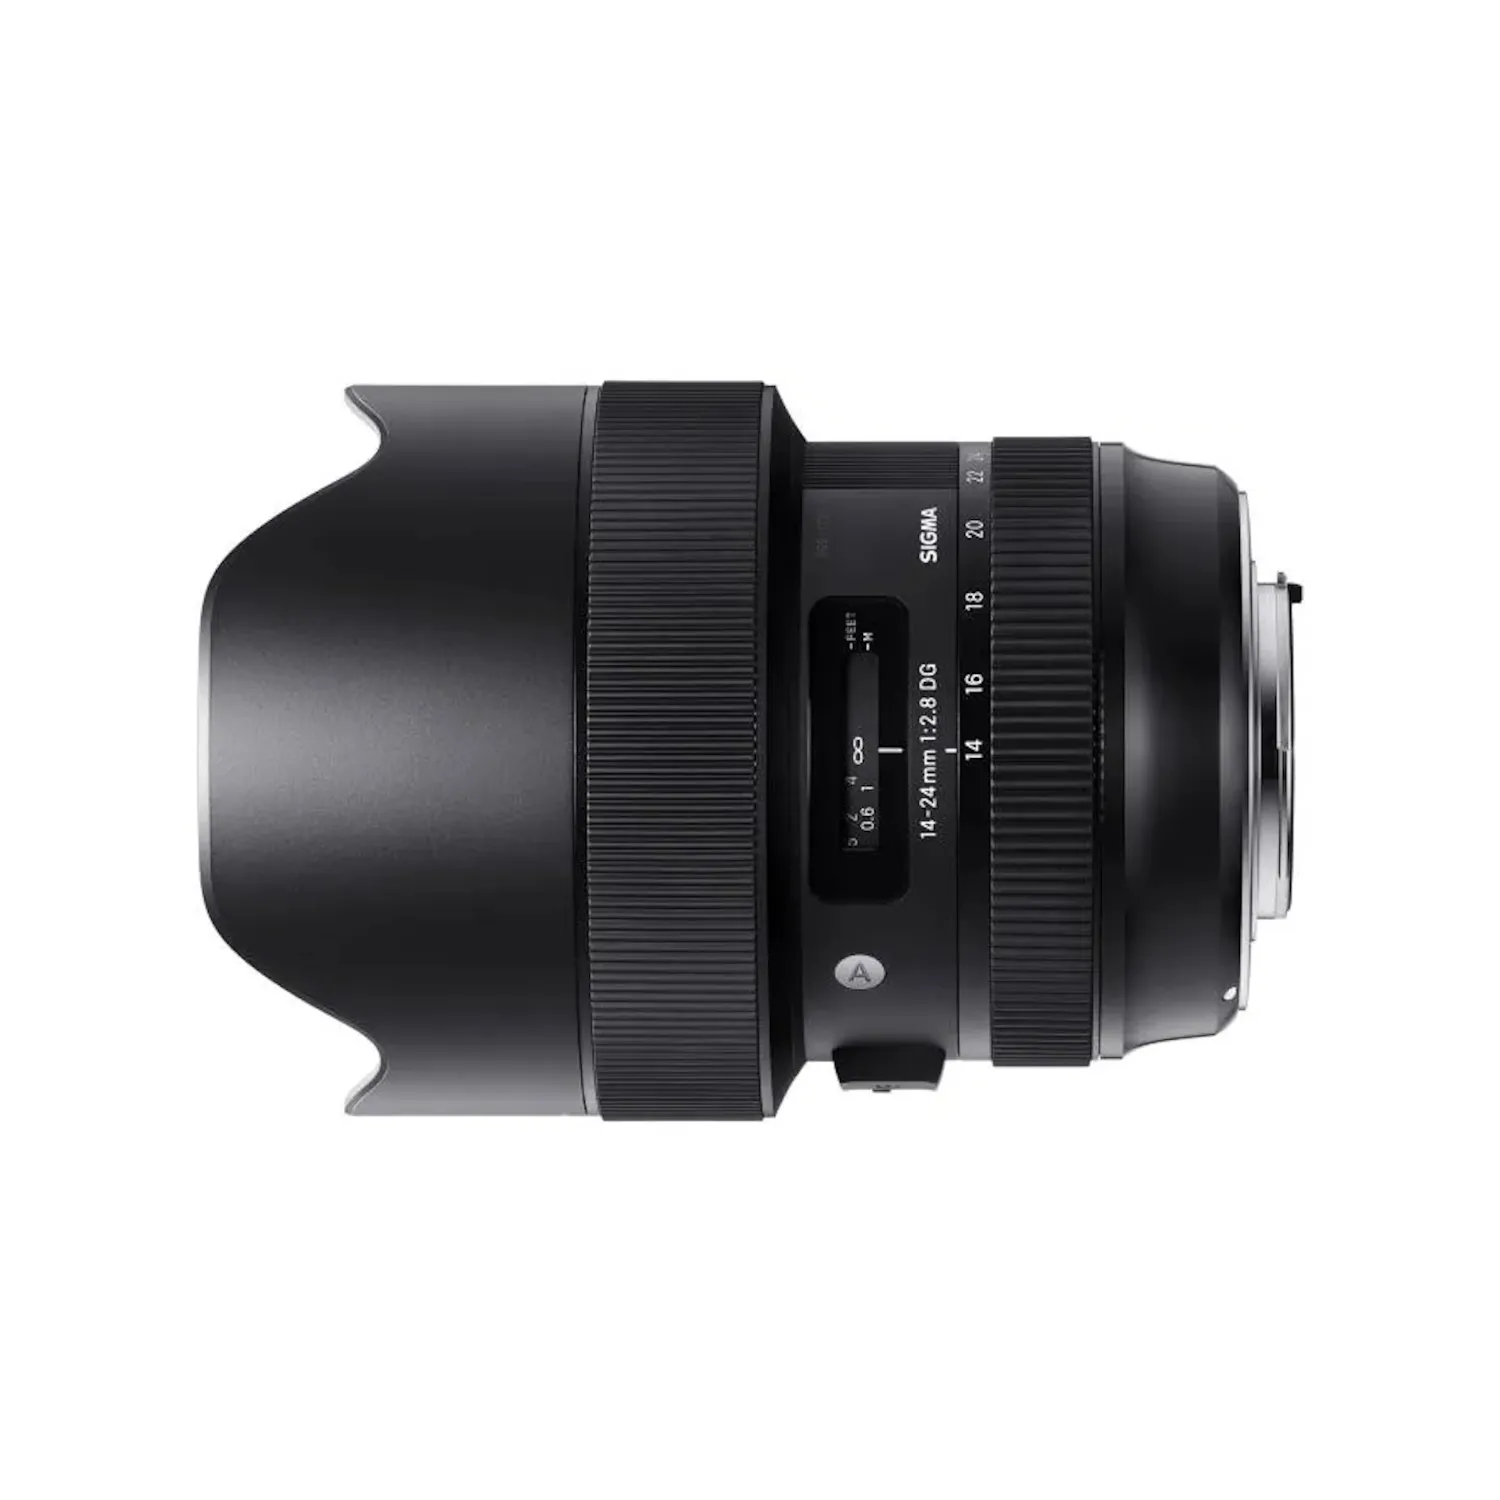 Sigma 14-24mm F2.8 DG HSM Art Lens